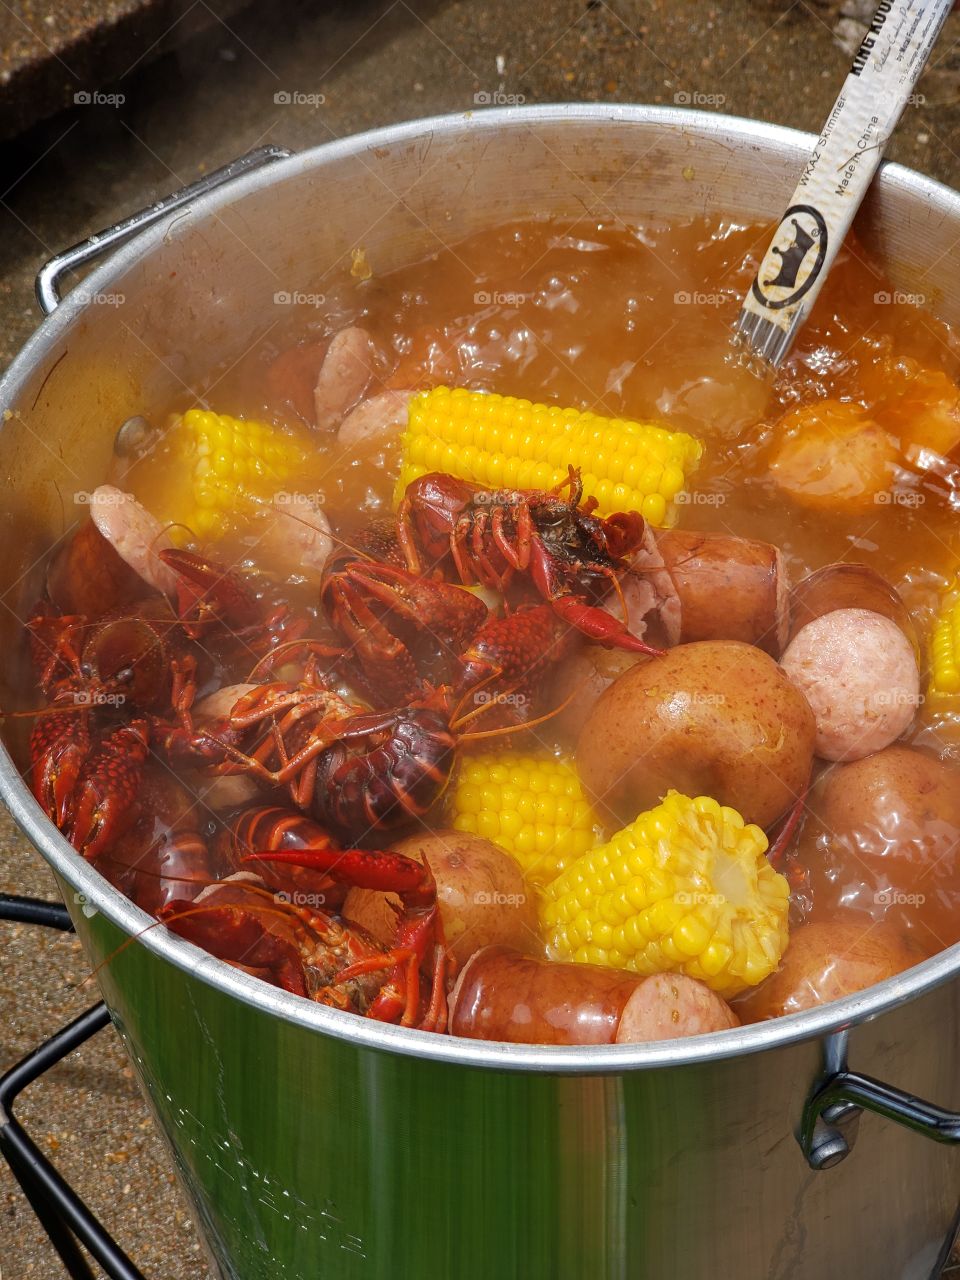 crawfish boil